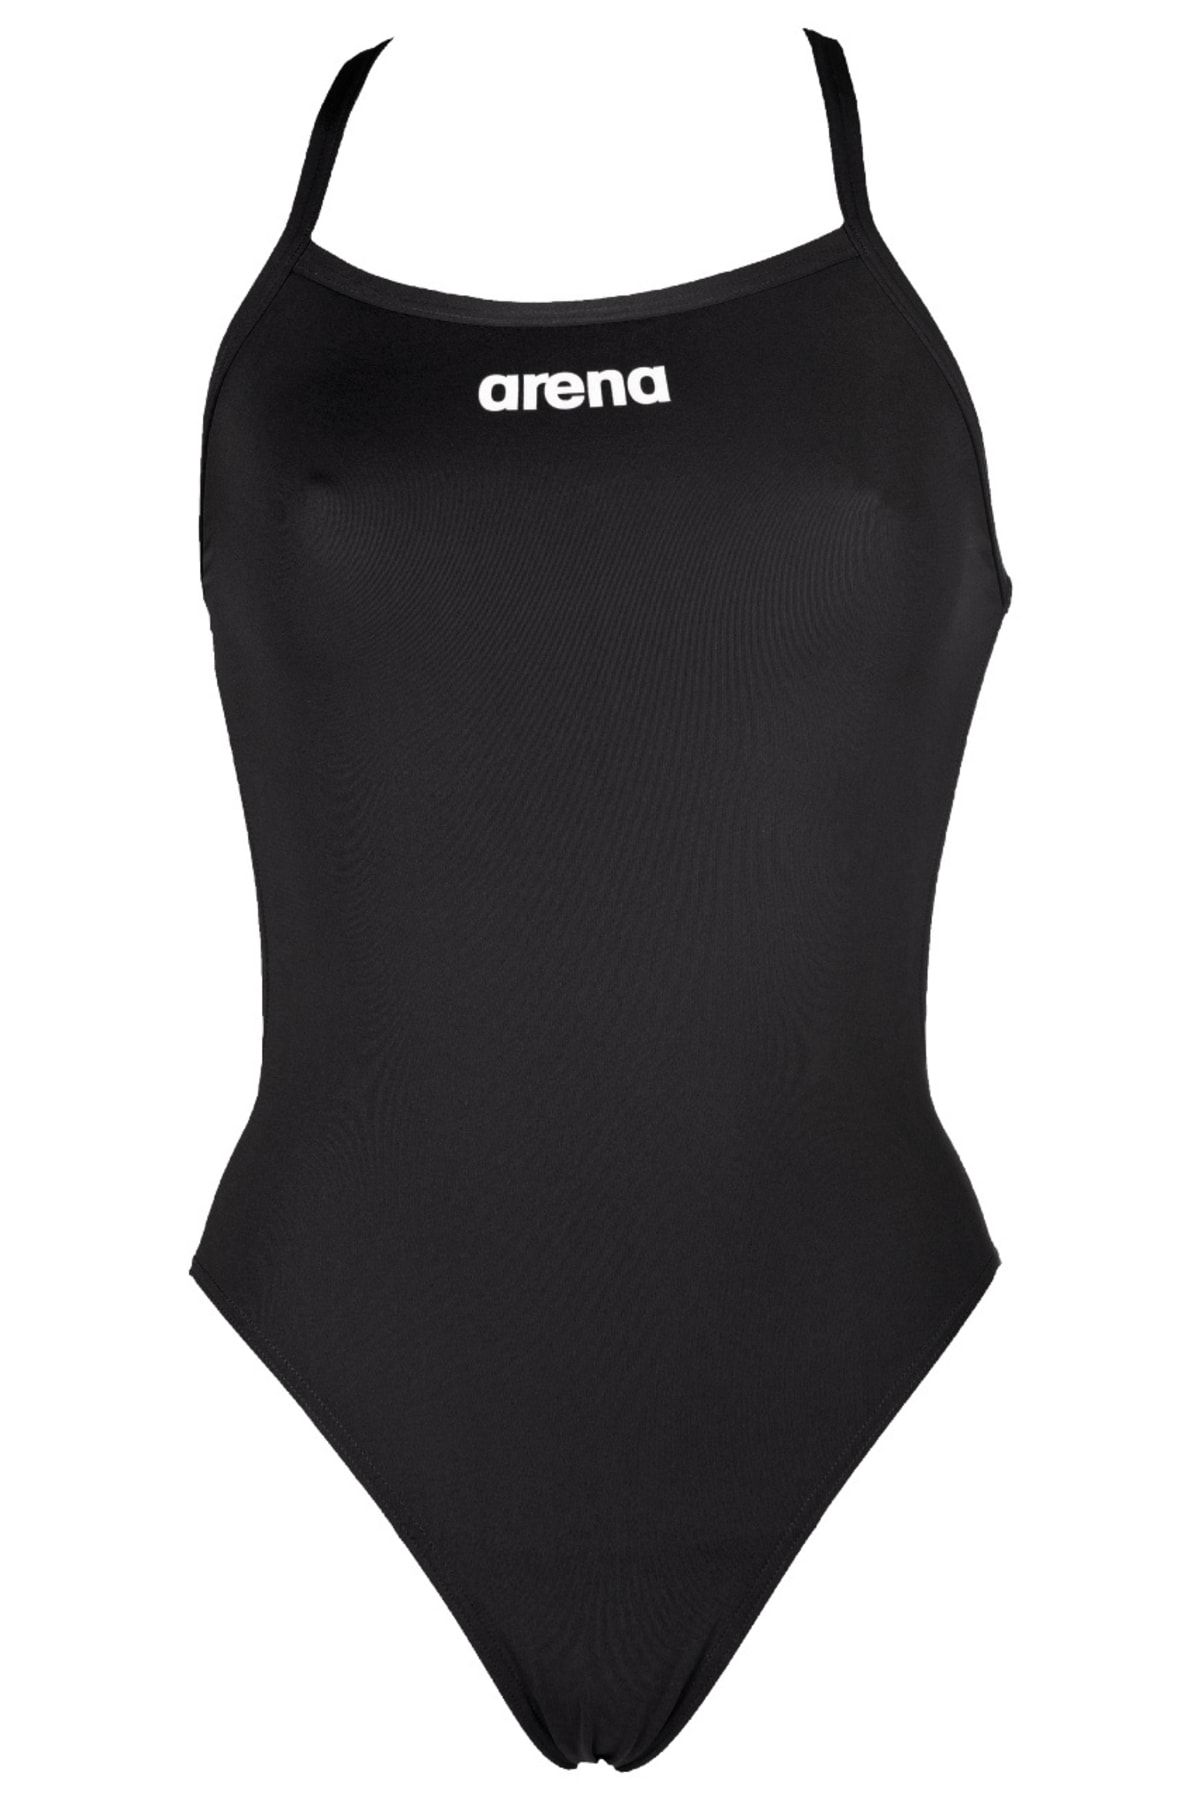 Arena W Solid Light Tech High Black -white Kadın Yüzücü Mayo